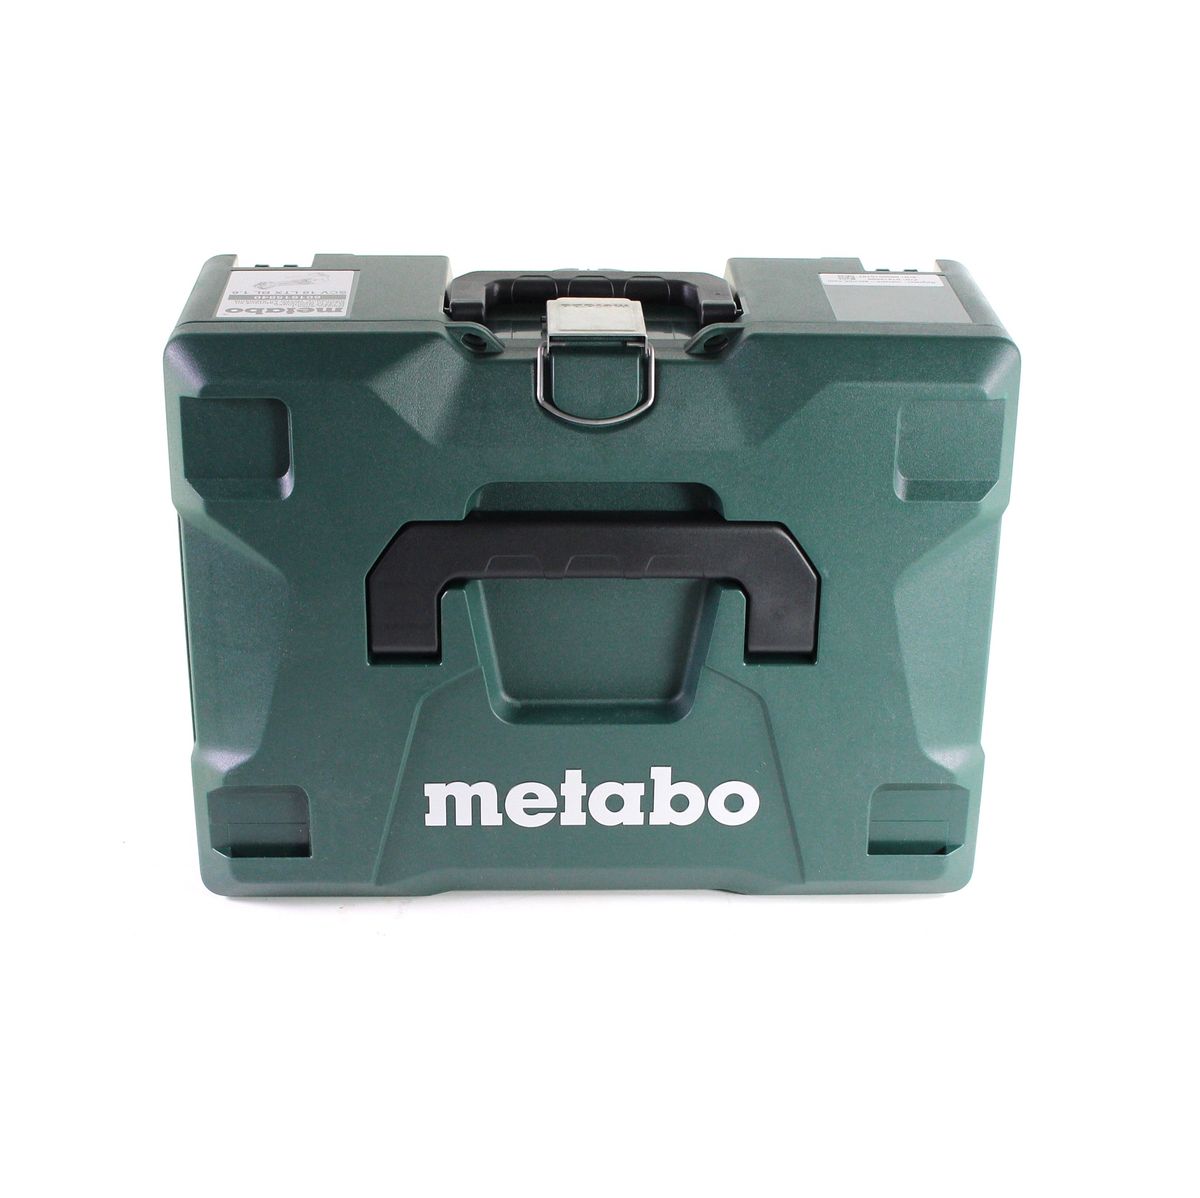 Metabo SCV 18 LTX BL 1.6 Cisaille à tôle sans fil Brushless + 1x Batterie LiHD 4,0 Ah, 18 V  + Chargeur + Coffret MetaLoc